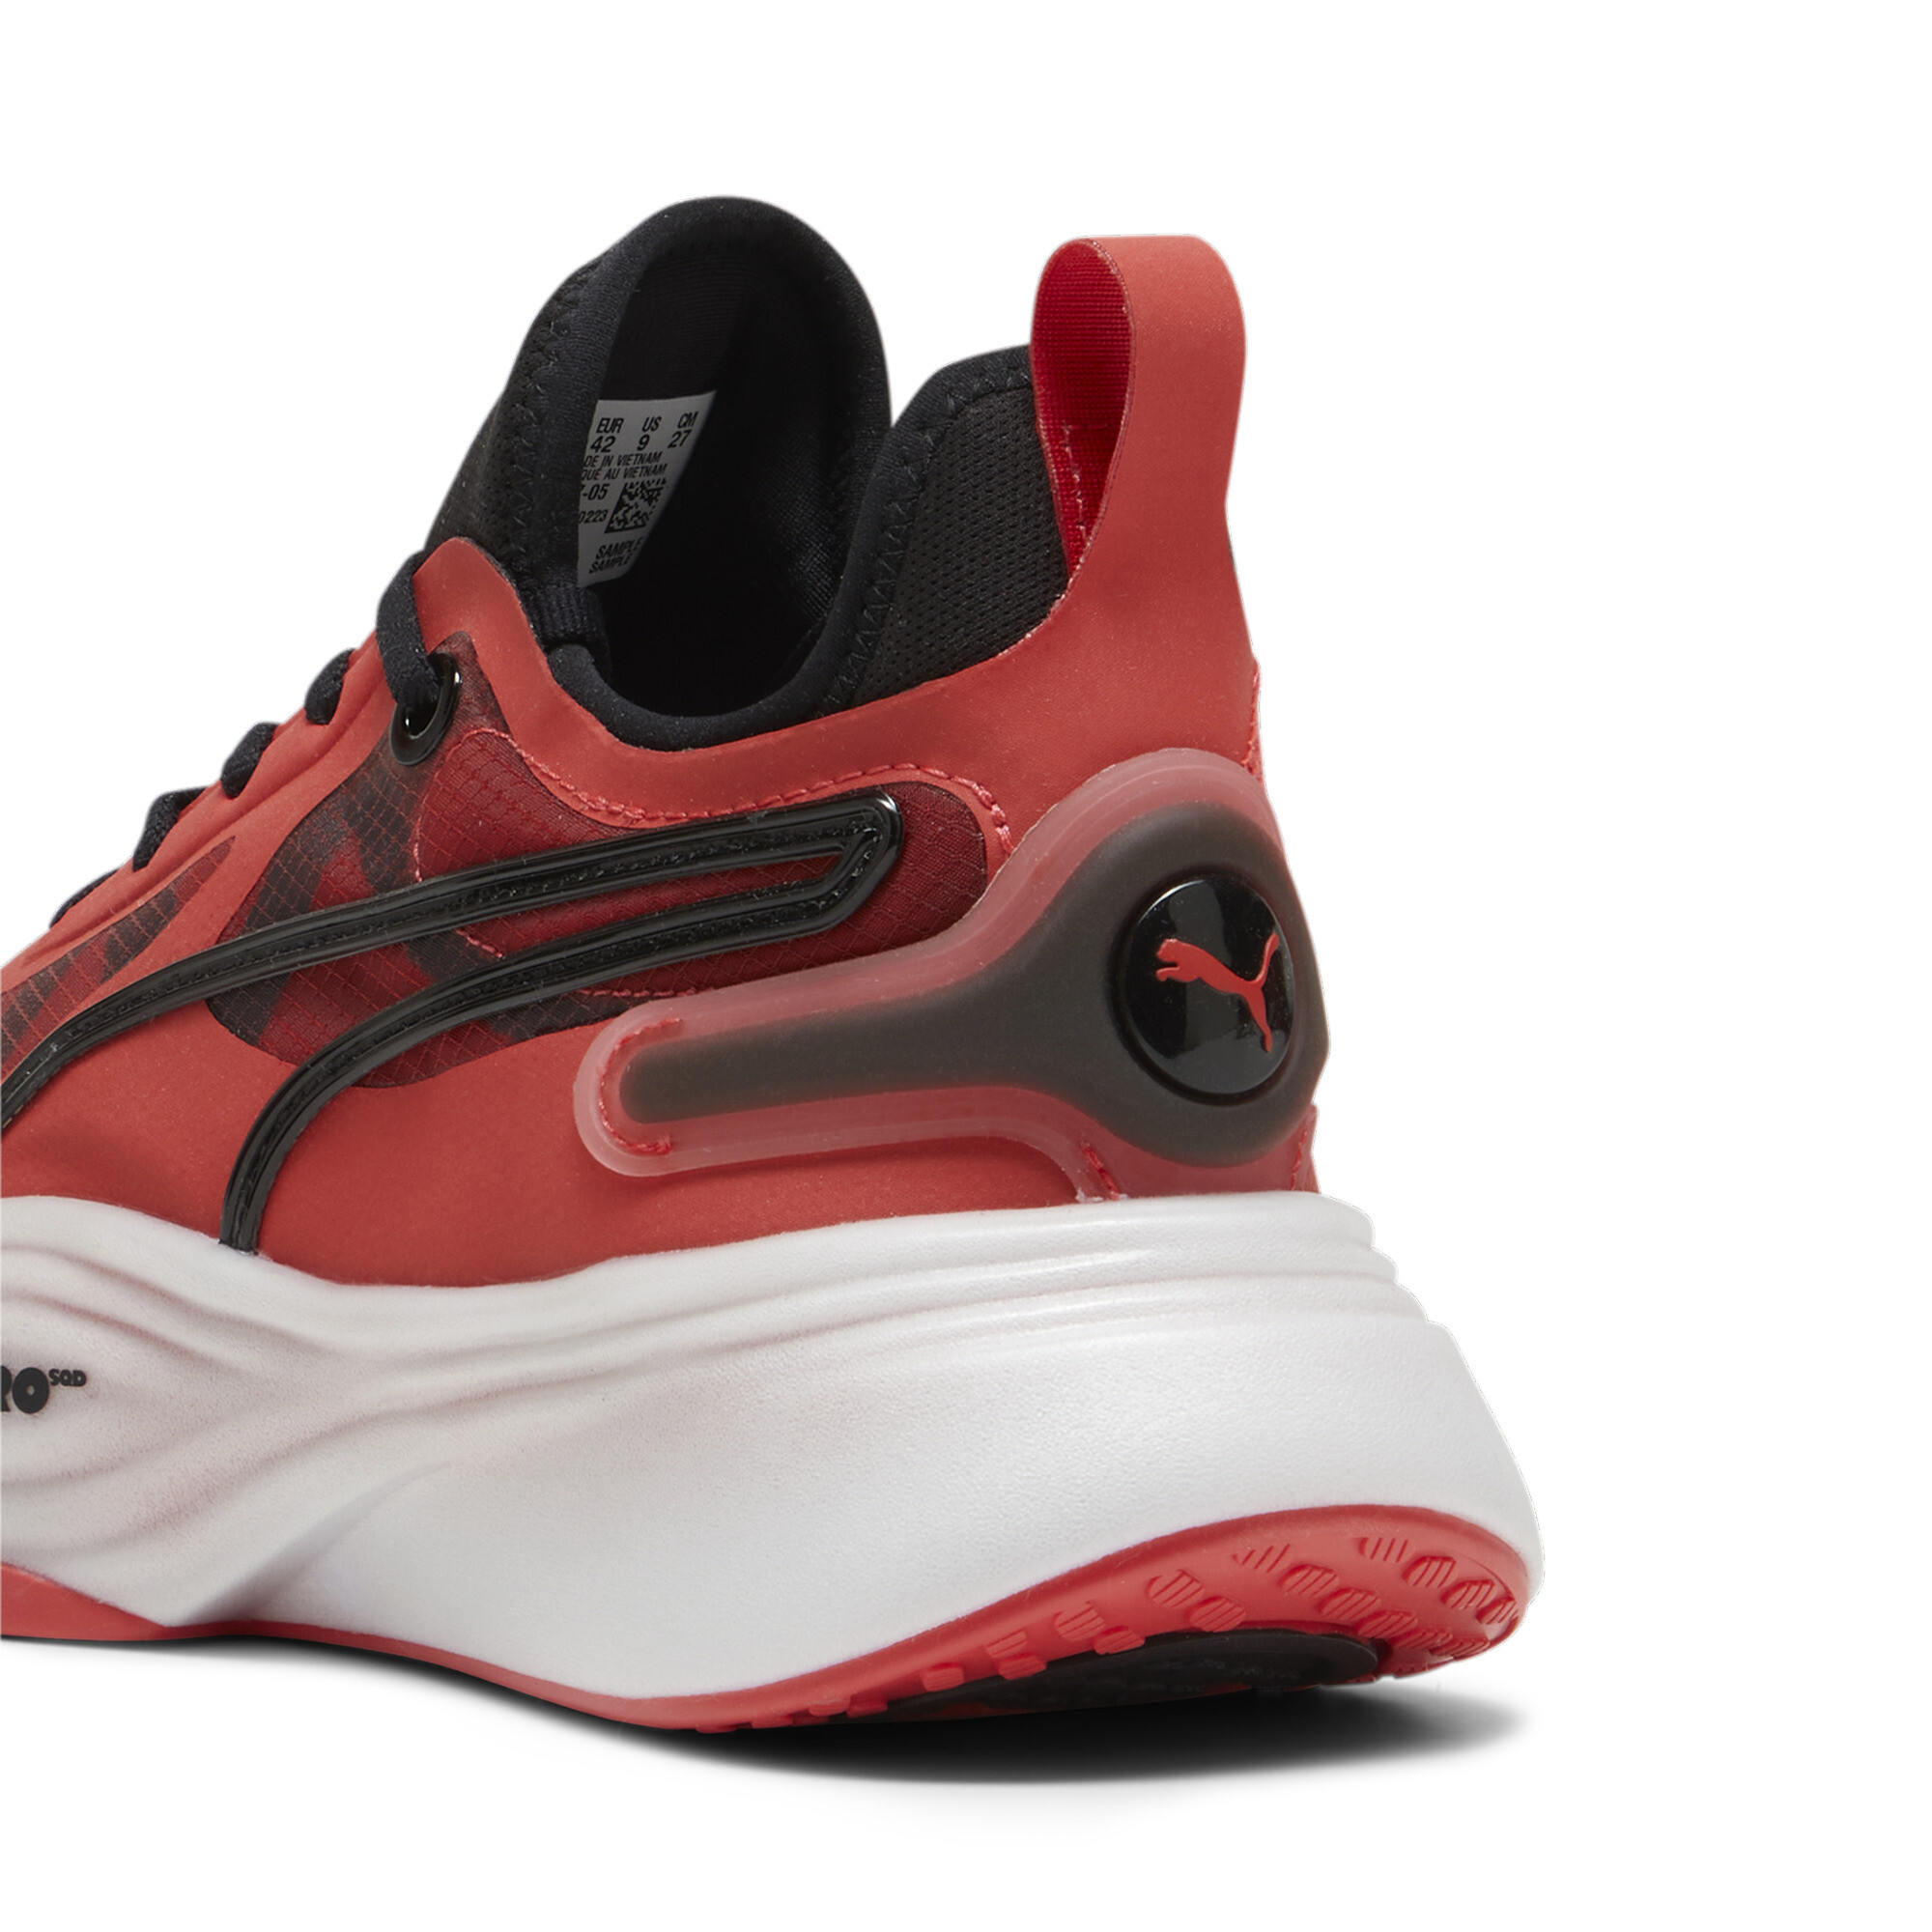 Men's PUMA PWR NITRO SQD Training Shoes In Red, Size EU 39